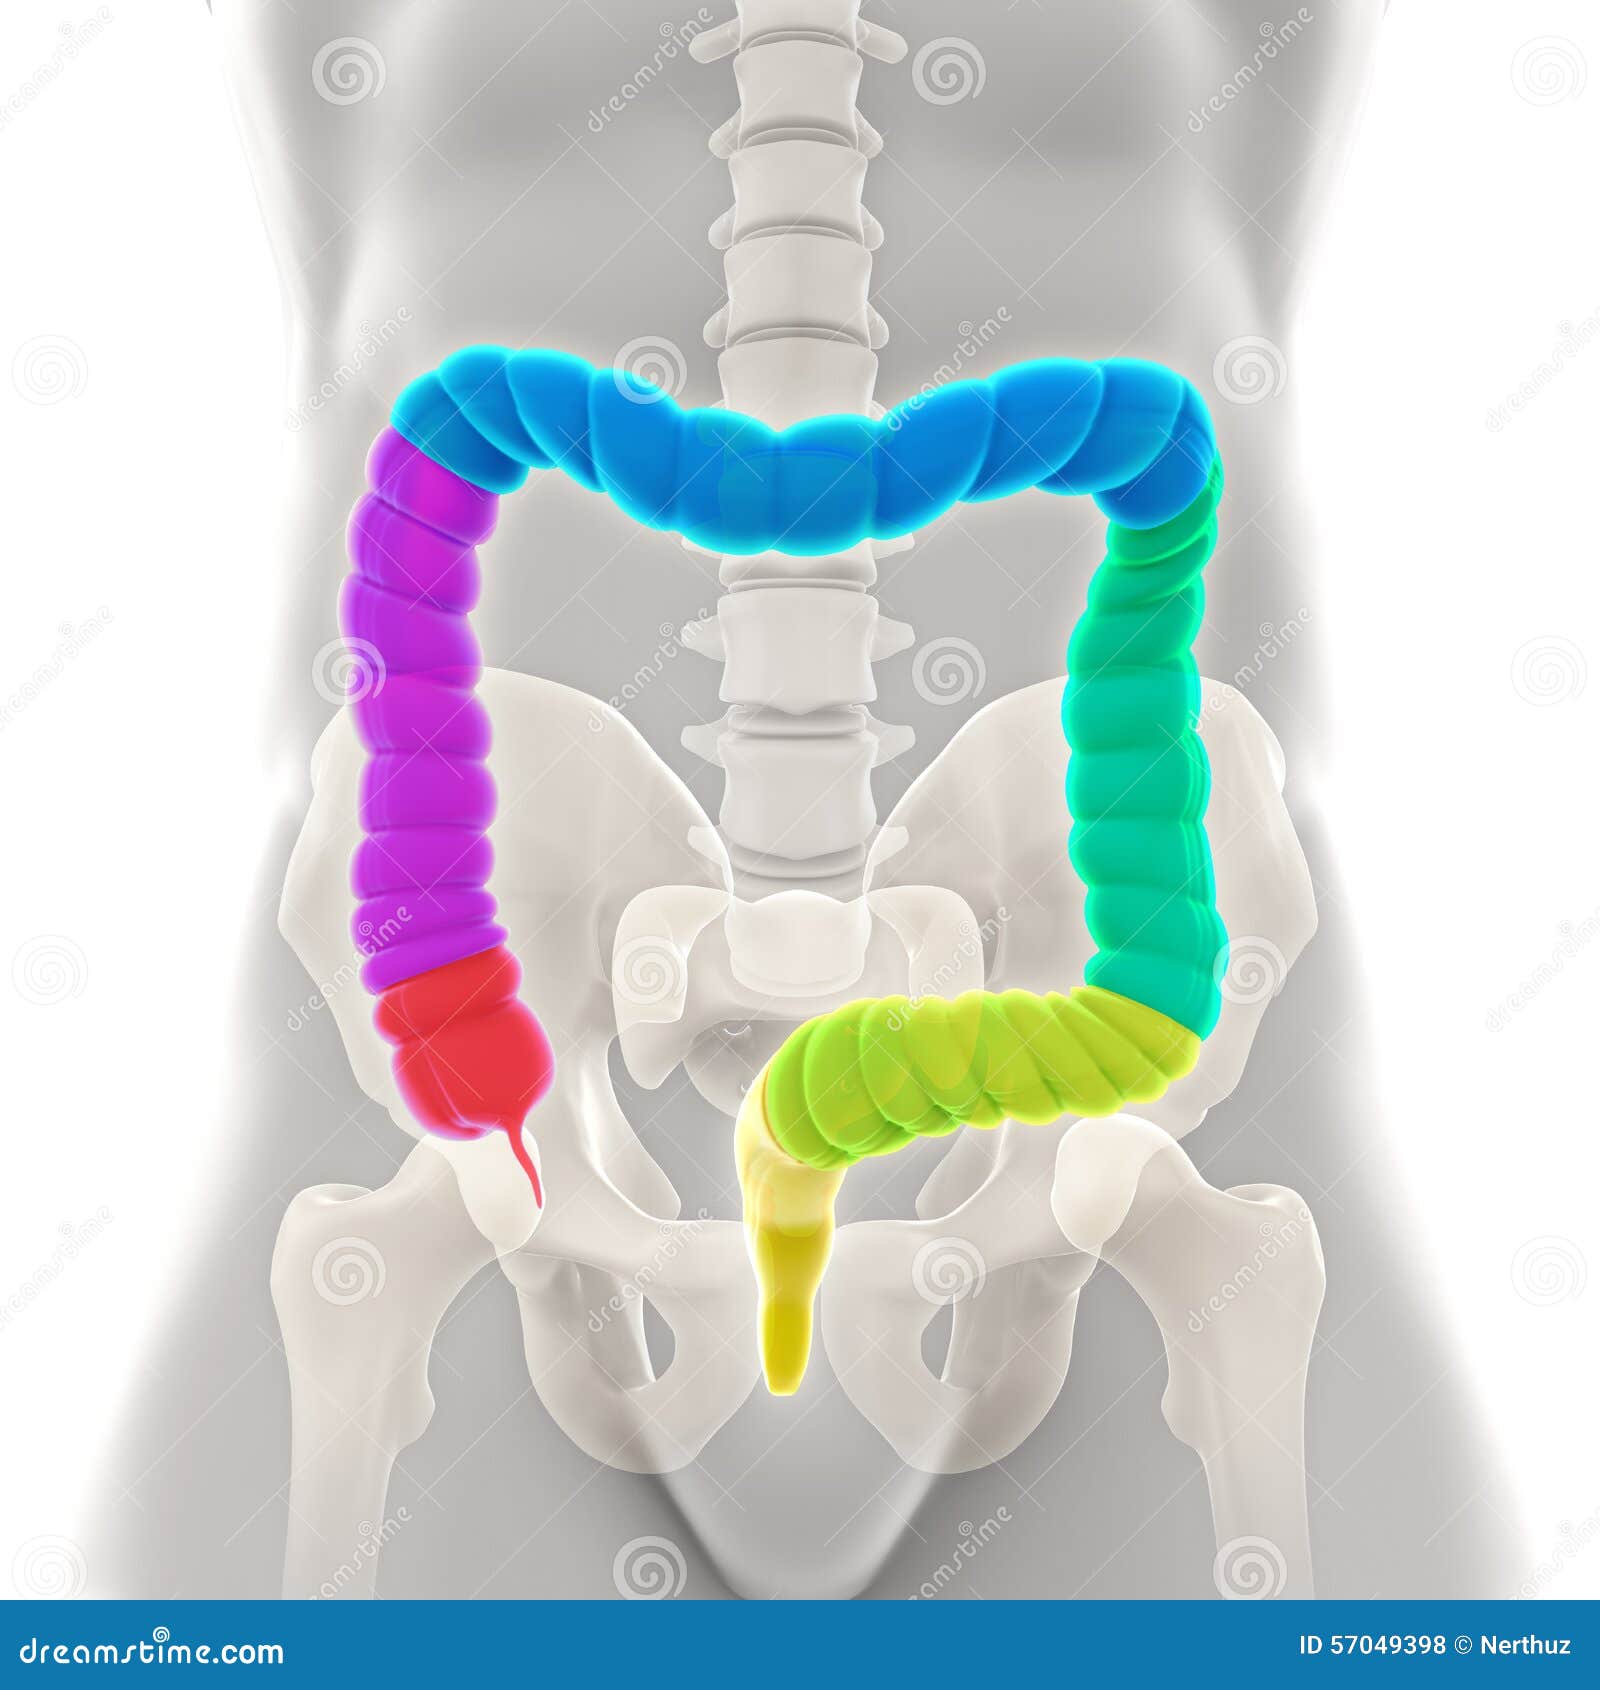 Human Colon Anatomy stock illustration. Image of anatomical - 57049398